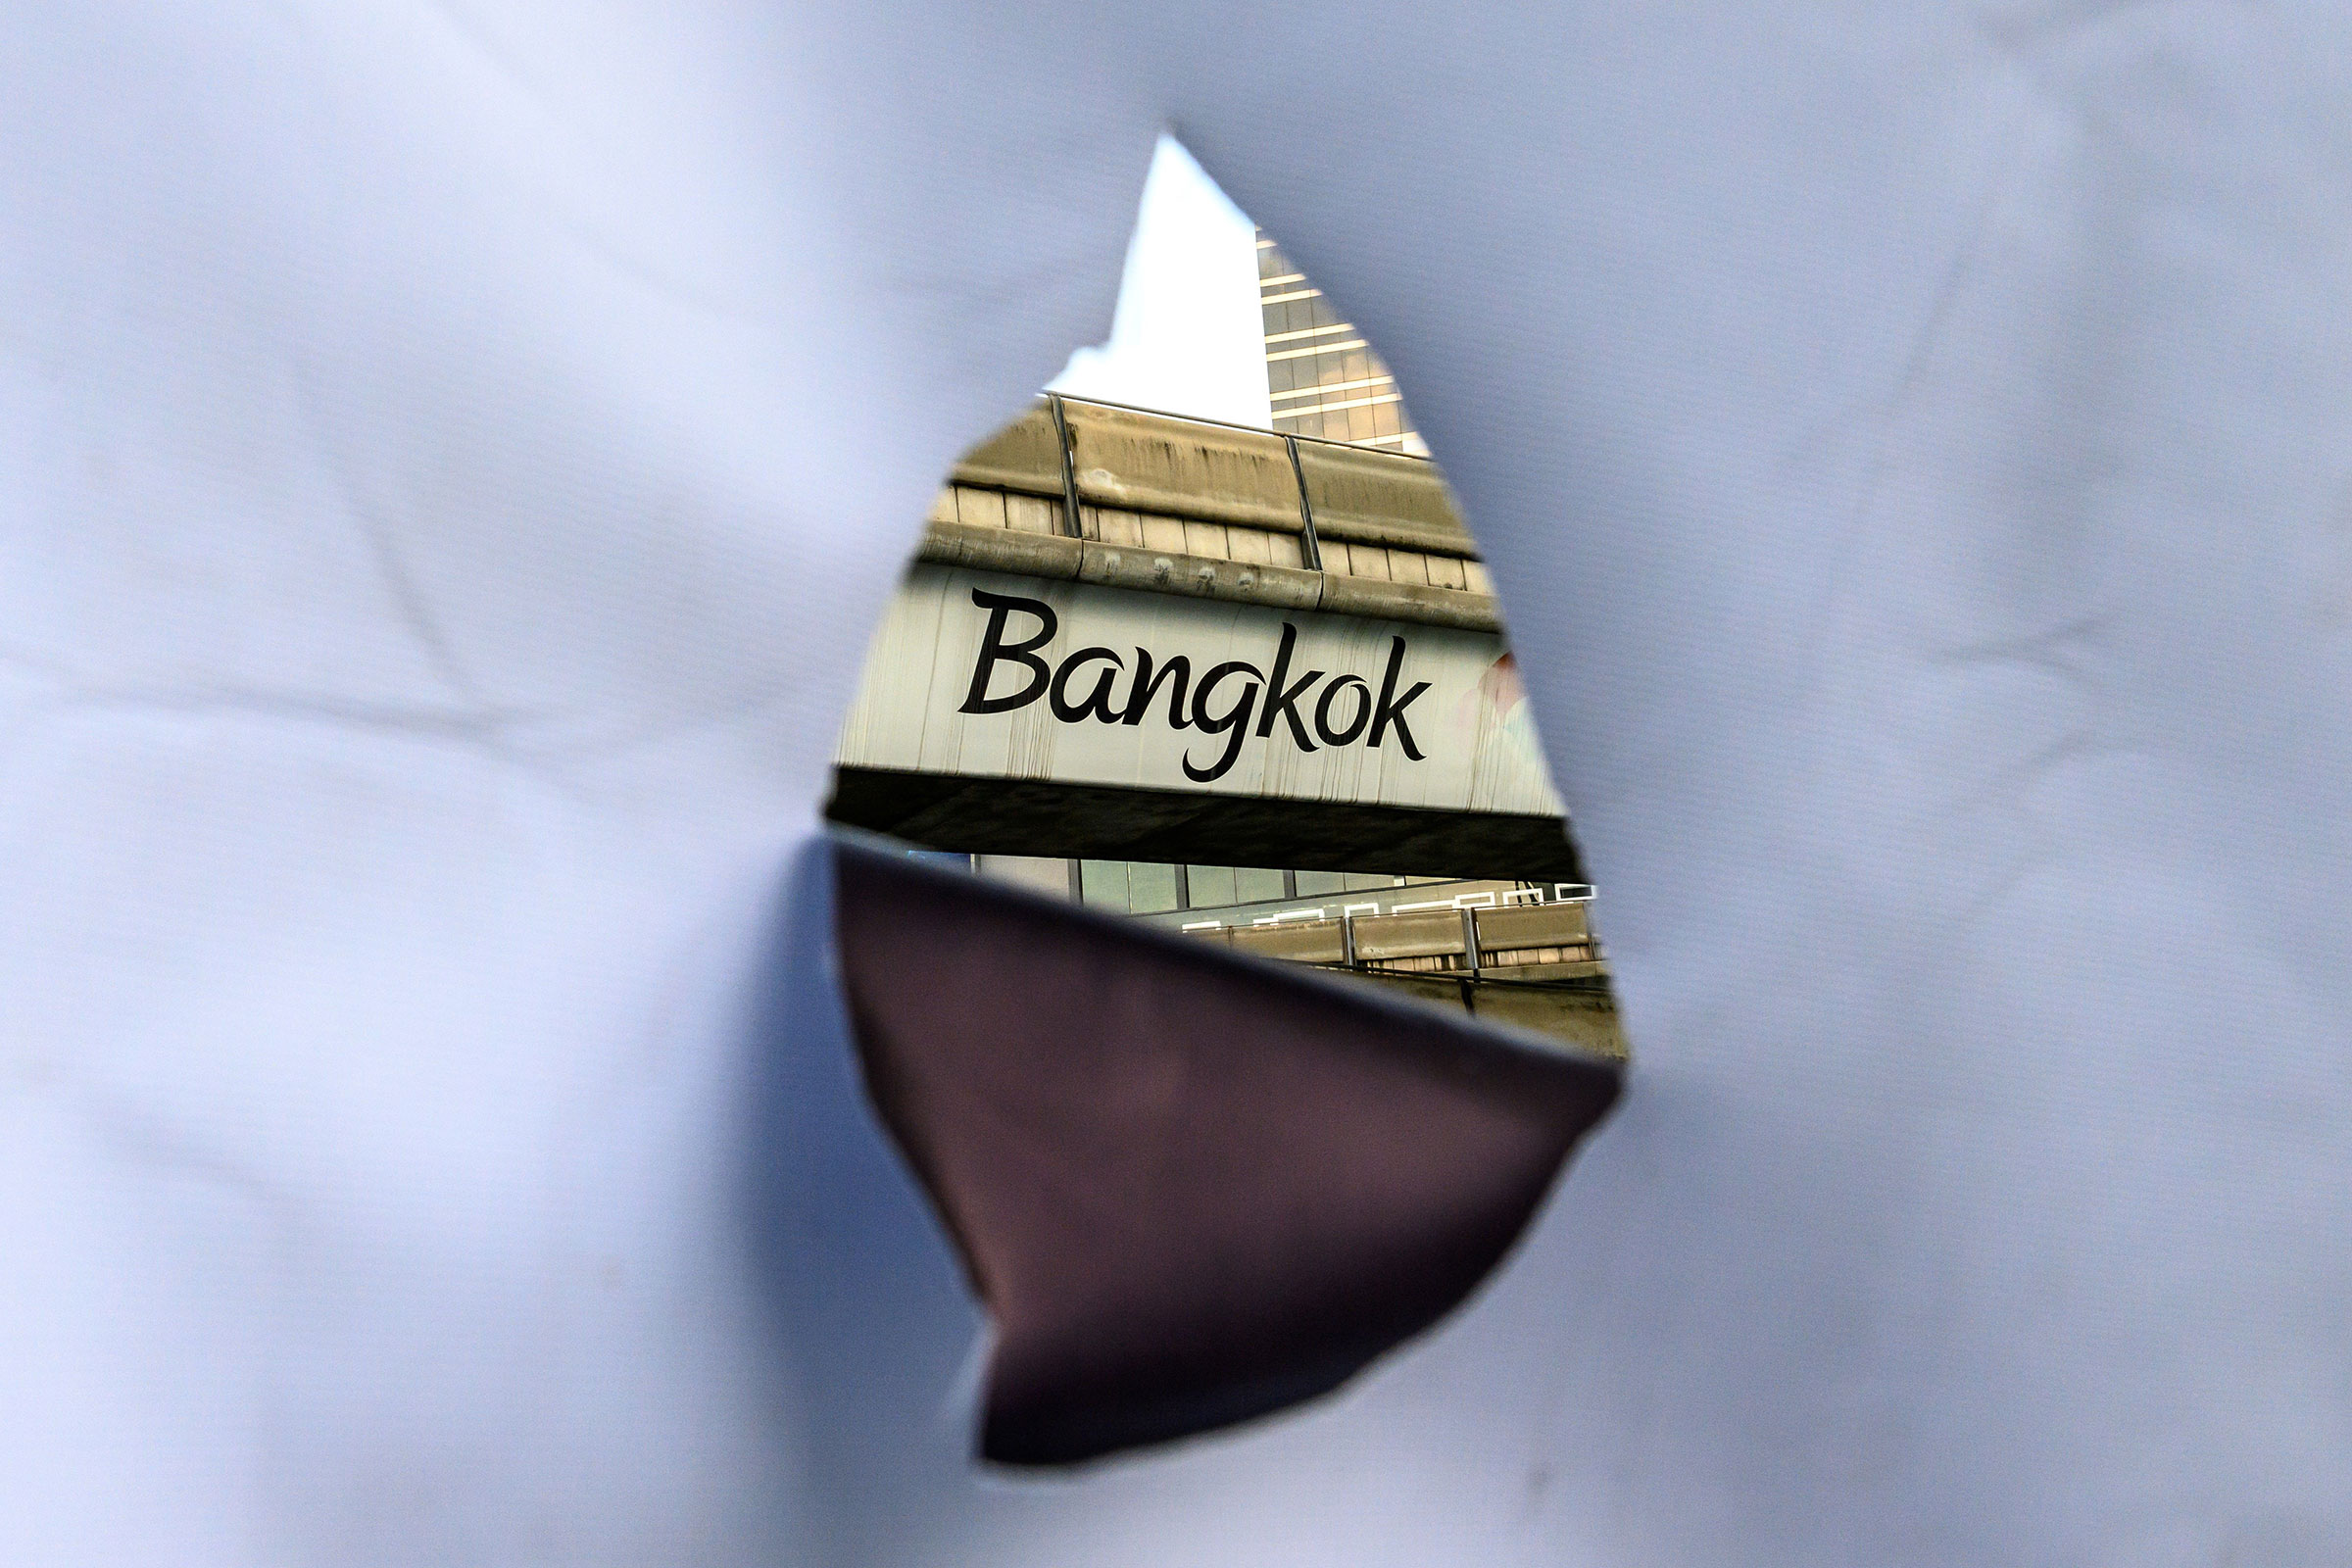 A Bangkok inscription on a sky train bridge is seen through the hole of a banner